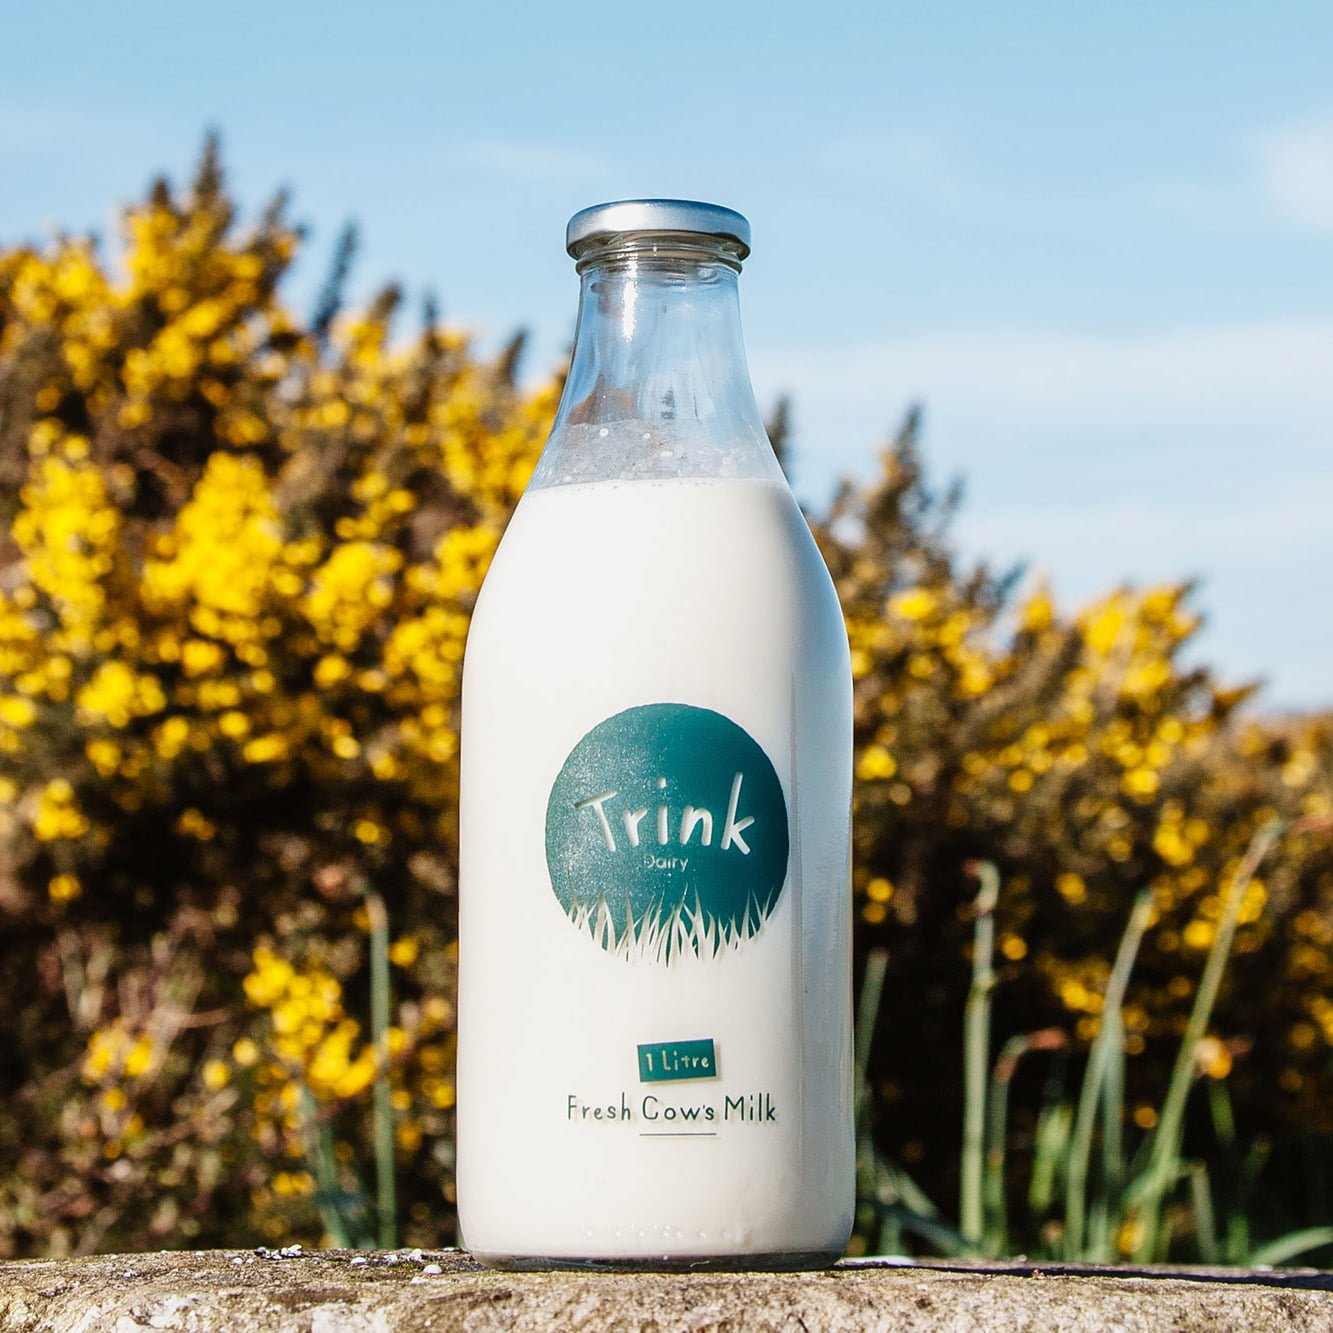 Trink Dairy Milk in outdoor setting